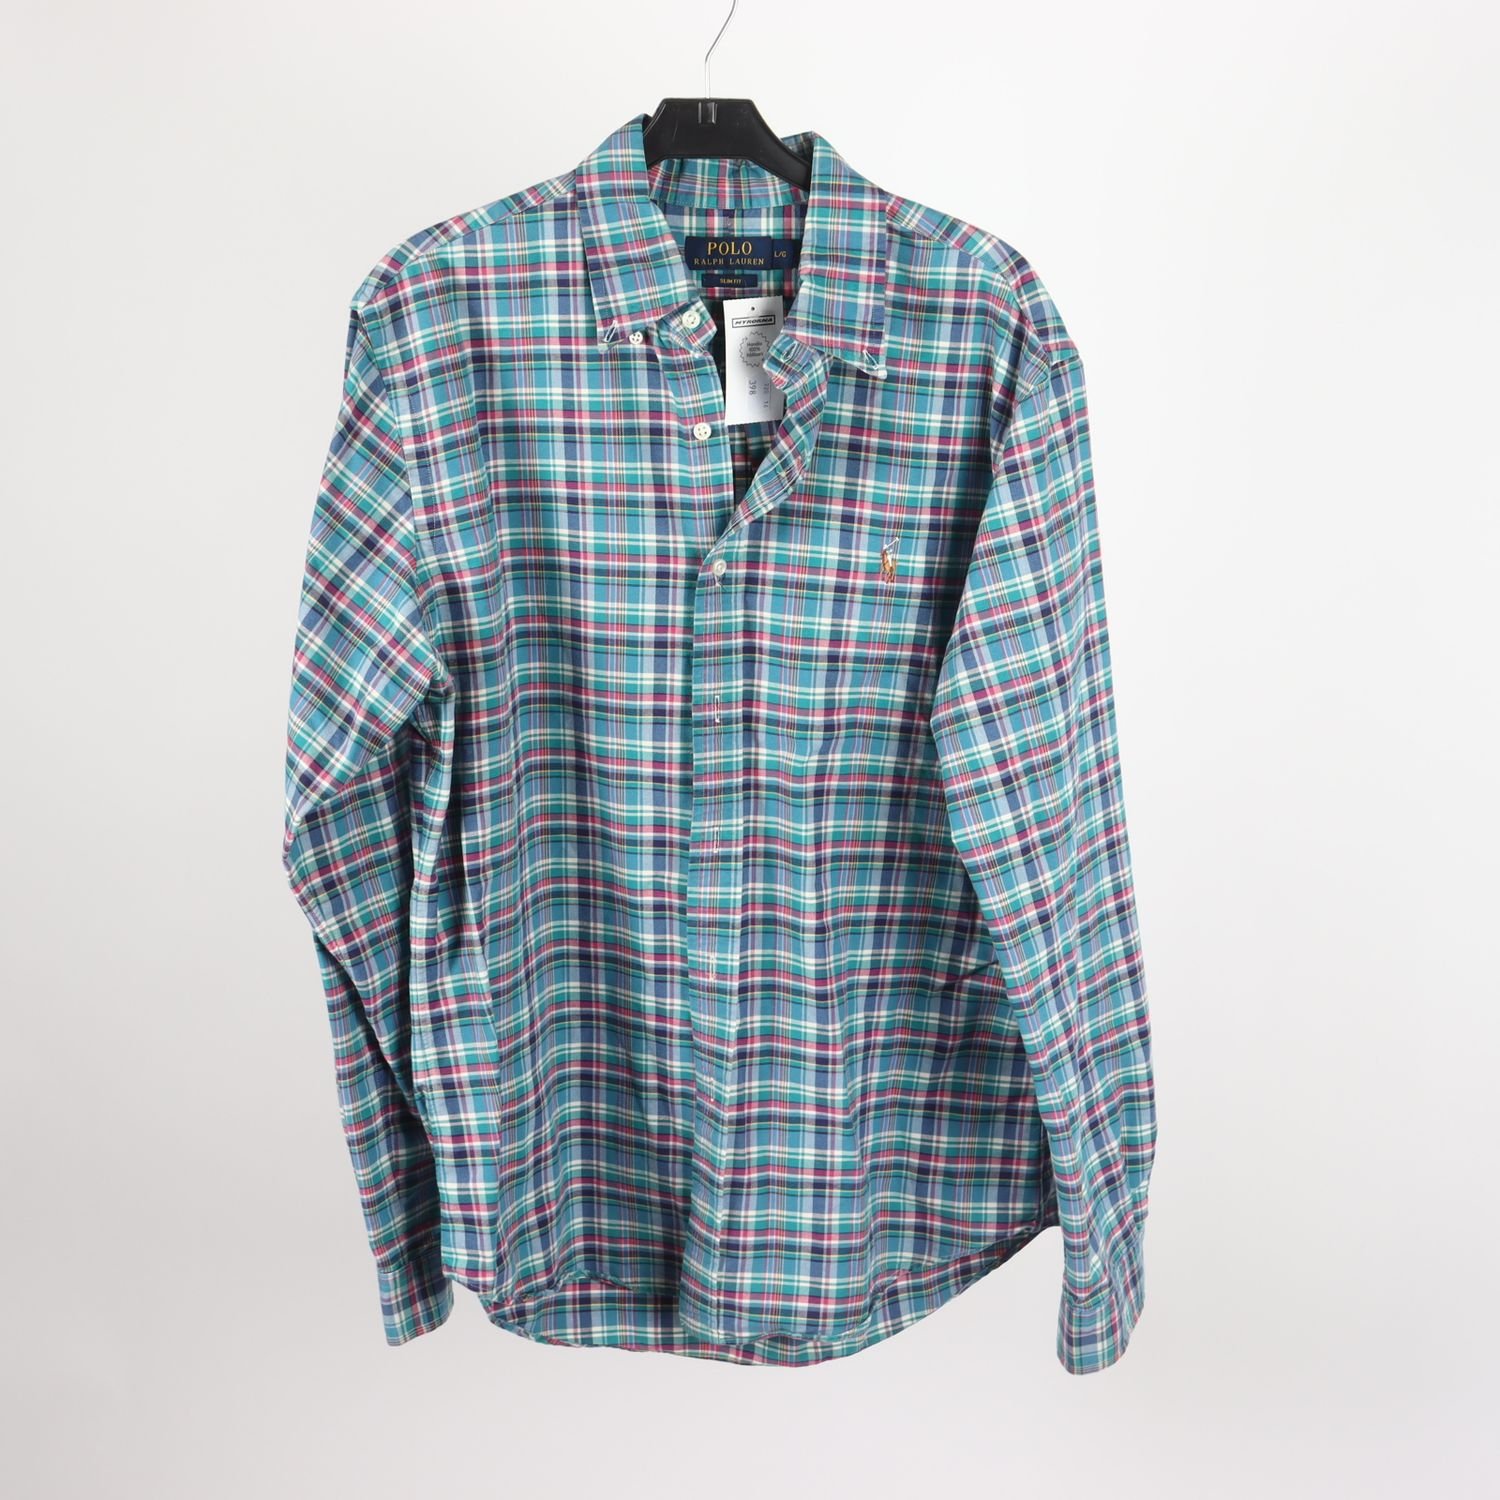 Skjorta, Polo Ralph Lauren, blå, grön, stl. L